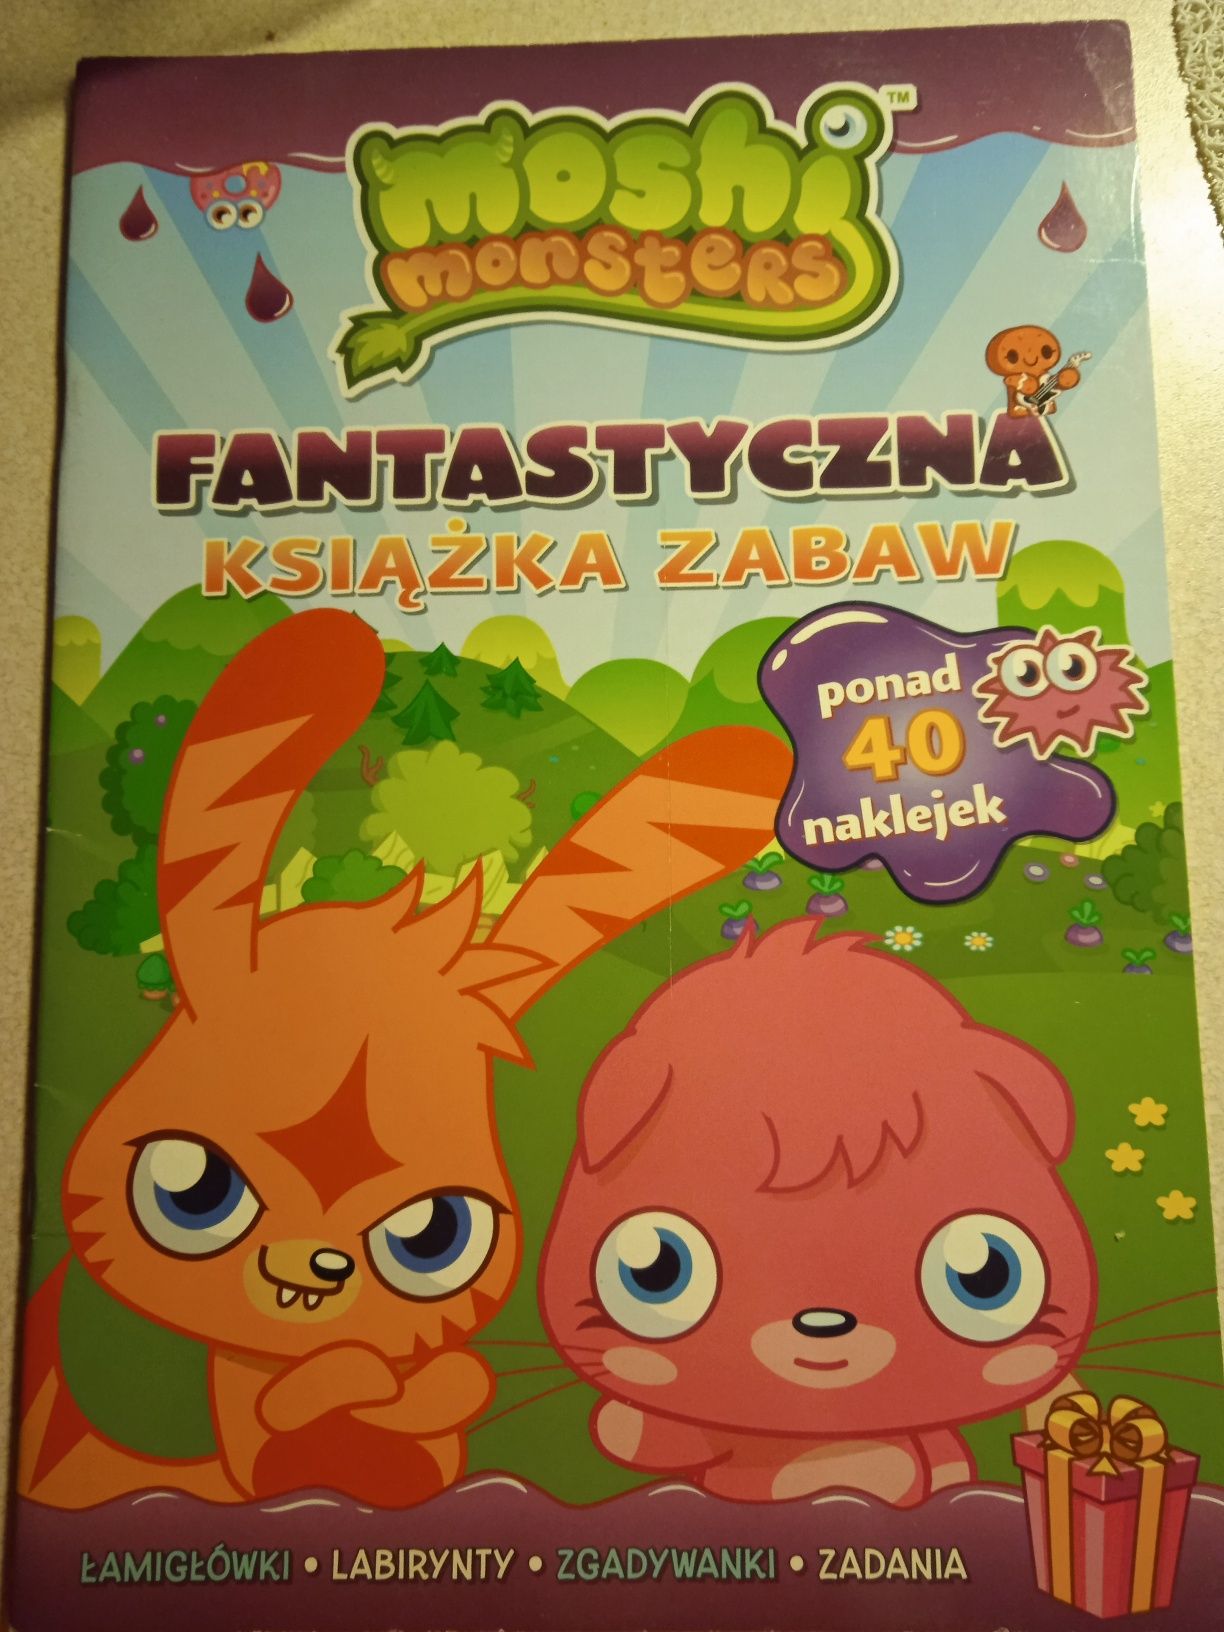 Fantastyczna książka zabaw misji monsters z naklejkami